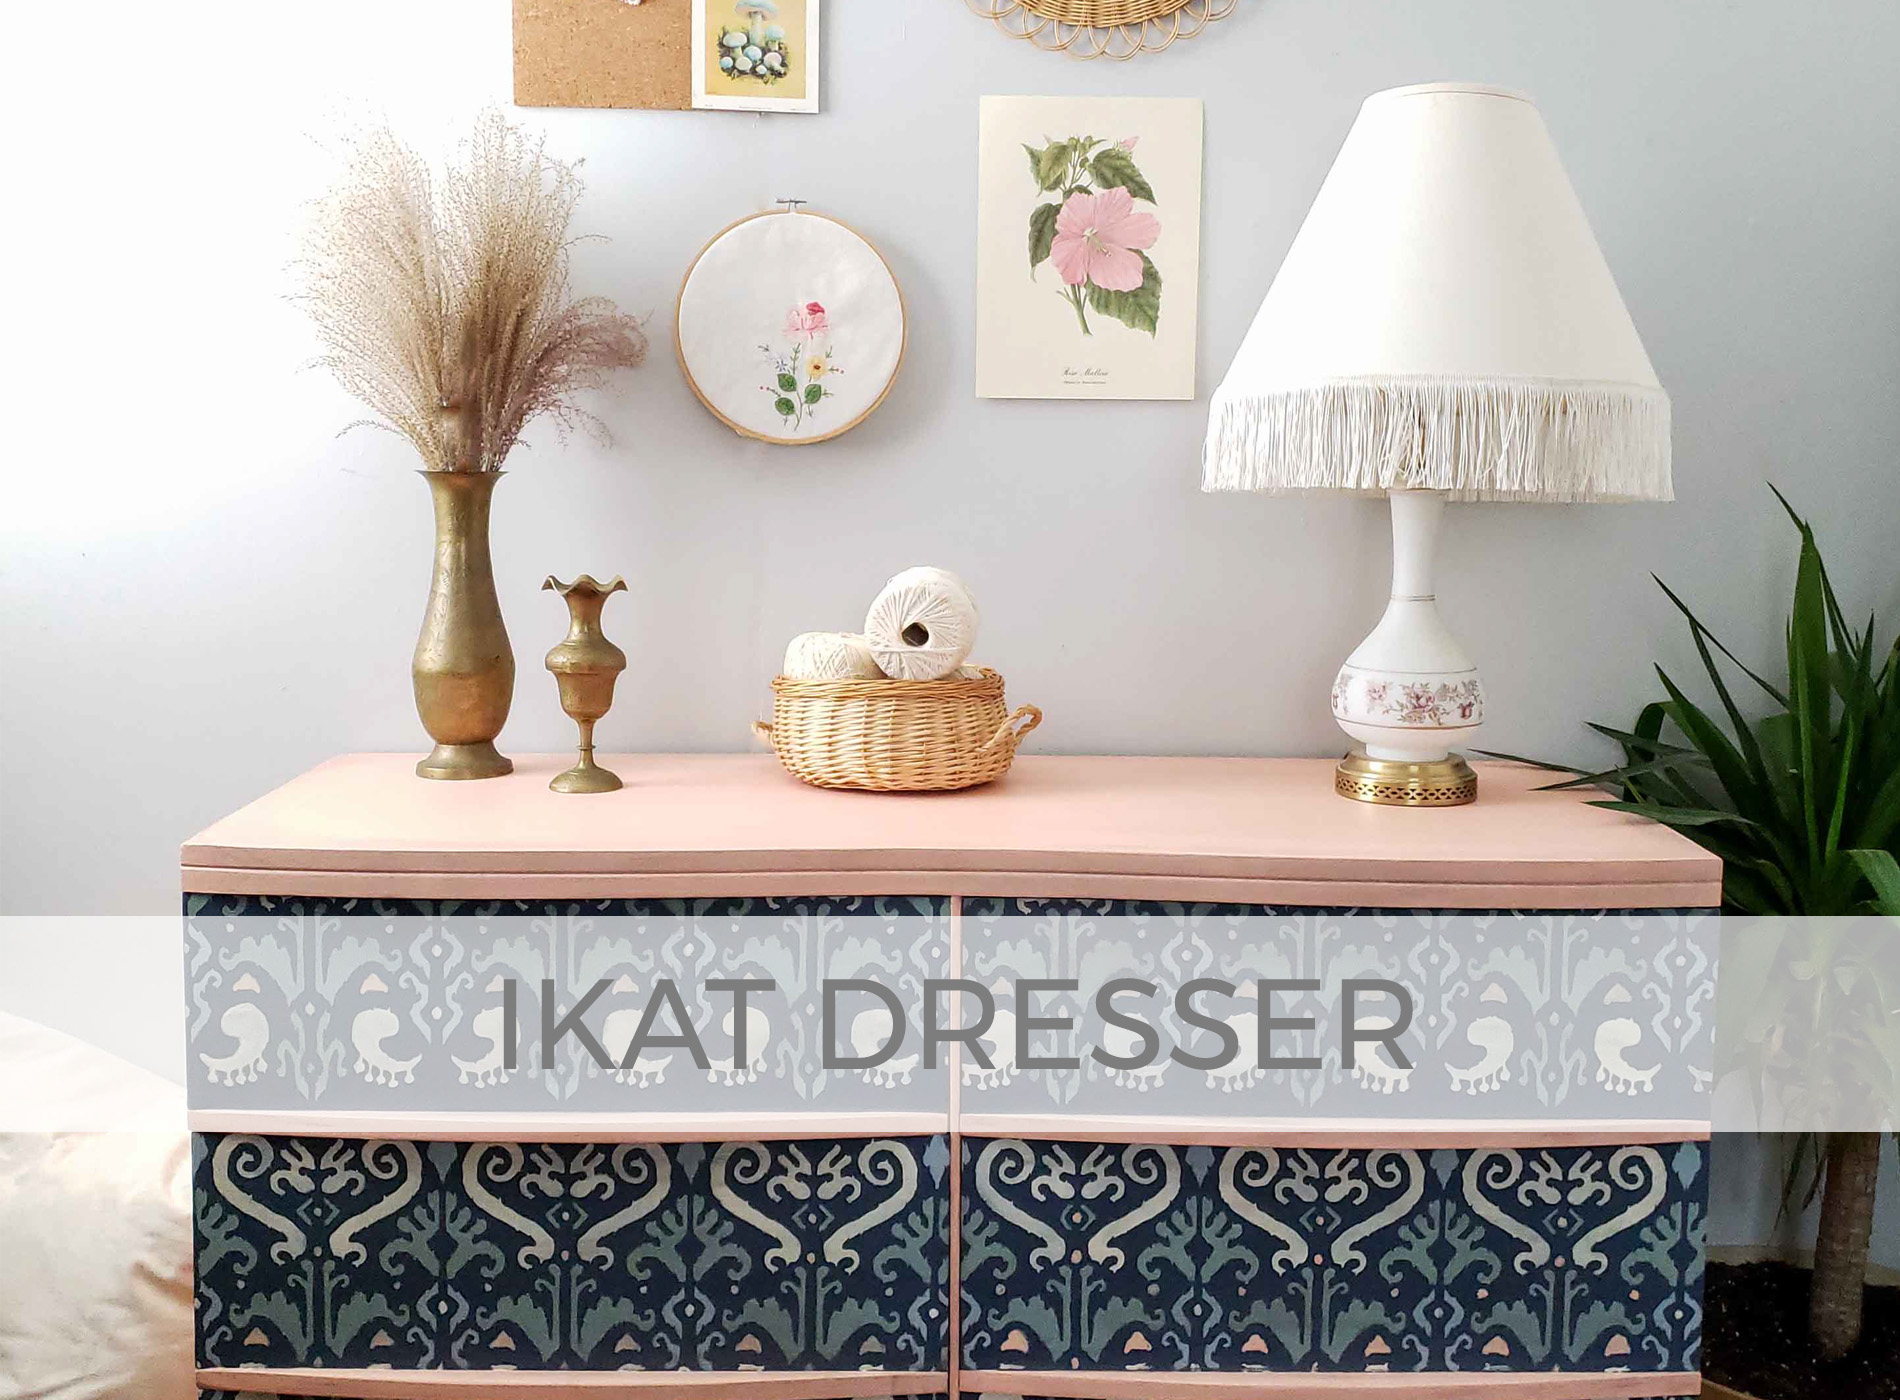 Stenciled Ikat Dresser by Larissa of Prodigal Pieces | prodigalpieces.com